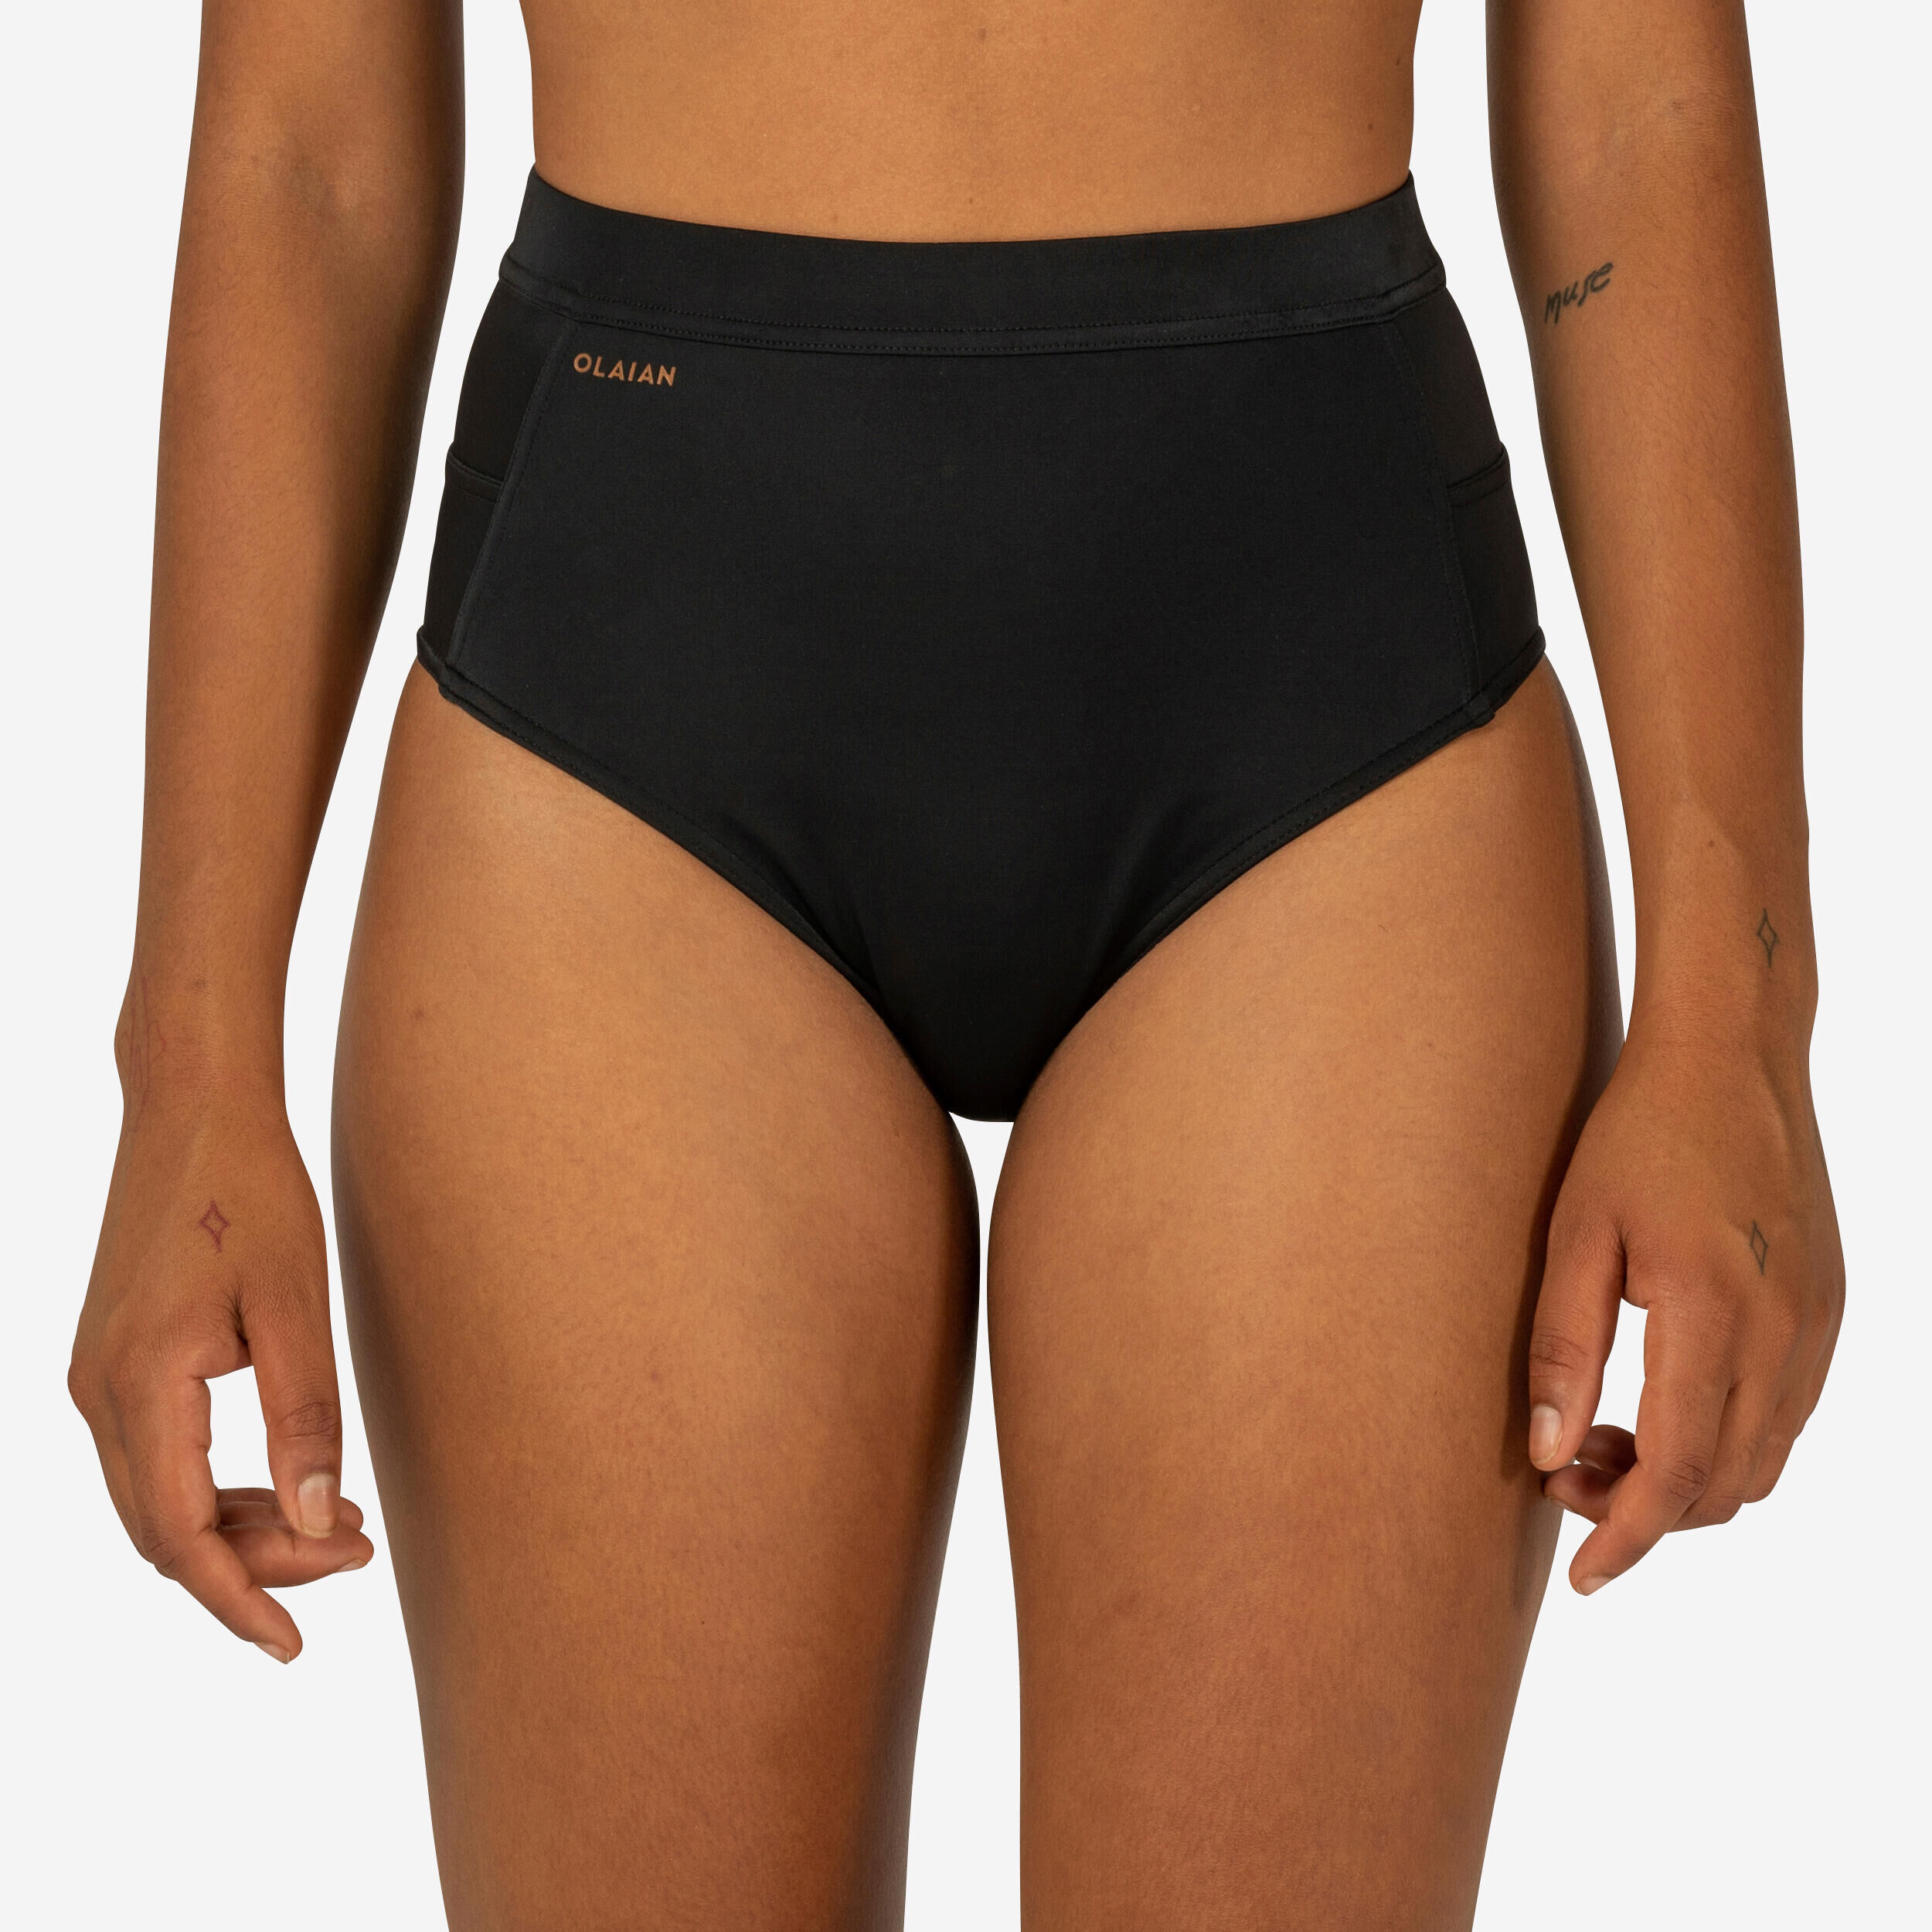 OLAIAN Women's high-waisted briefs swimsuit bottoms - Rosa black